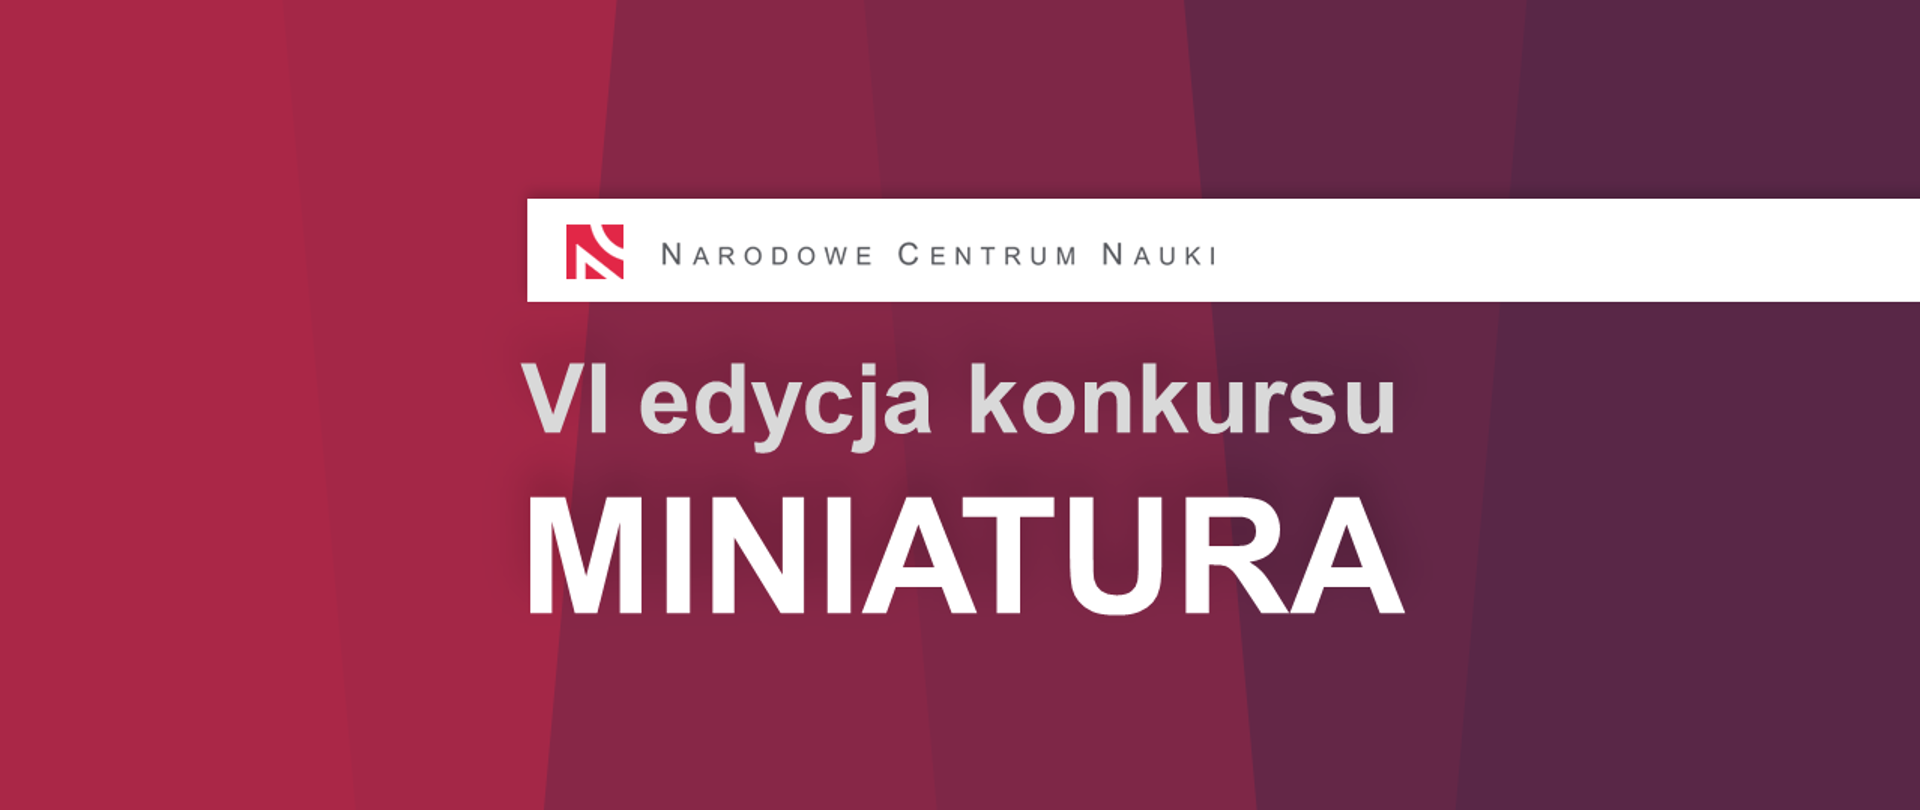 Grafika z tekstem: Narodowe Centrum Nauki - 6. edycja konkursu "Miniatura"